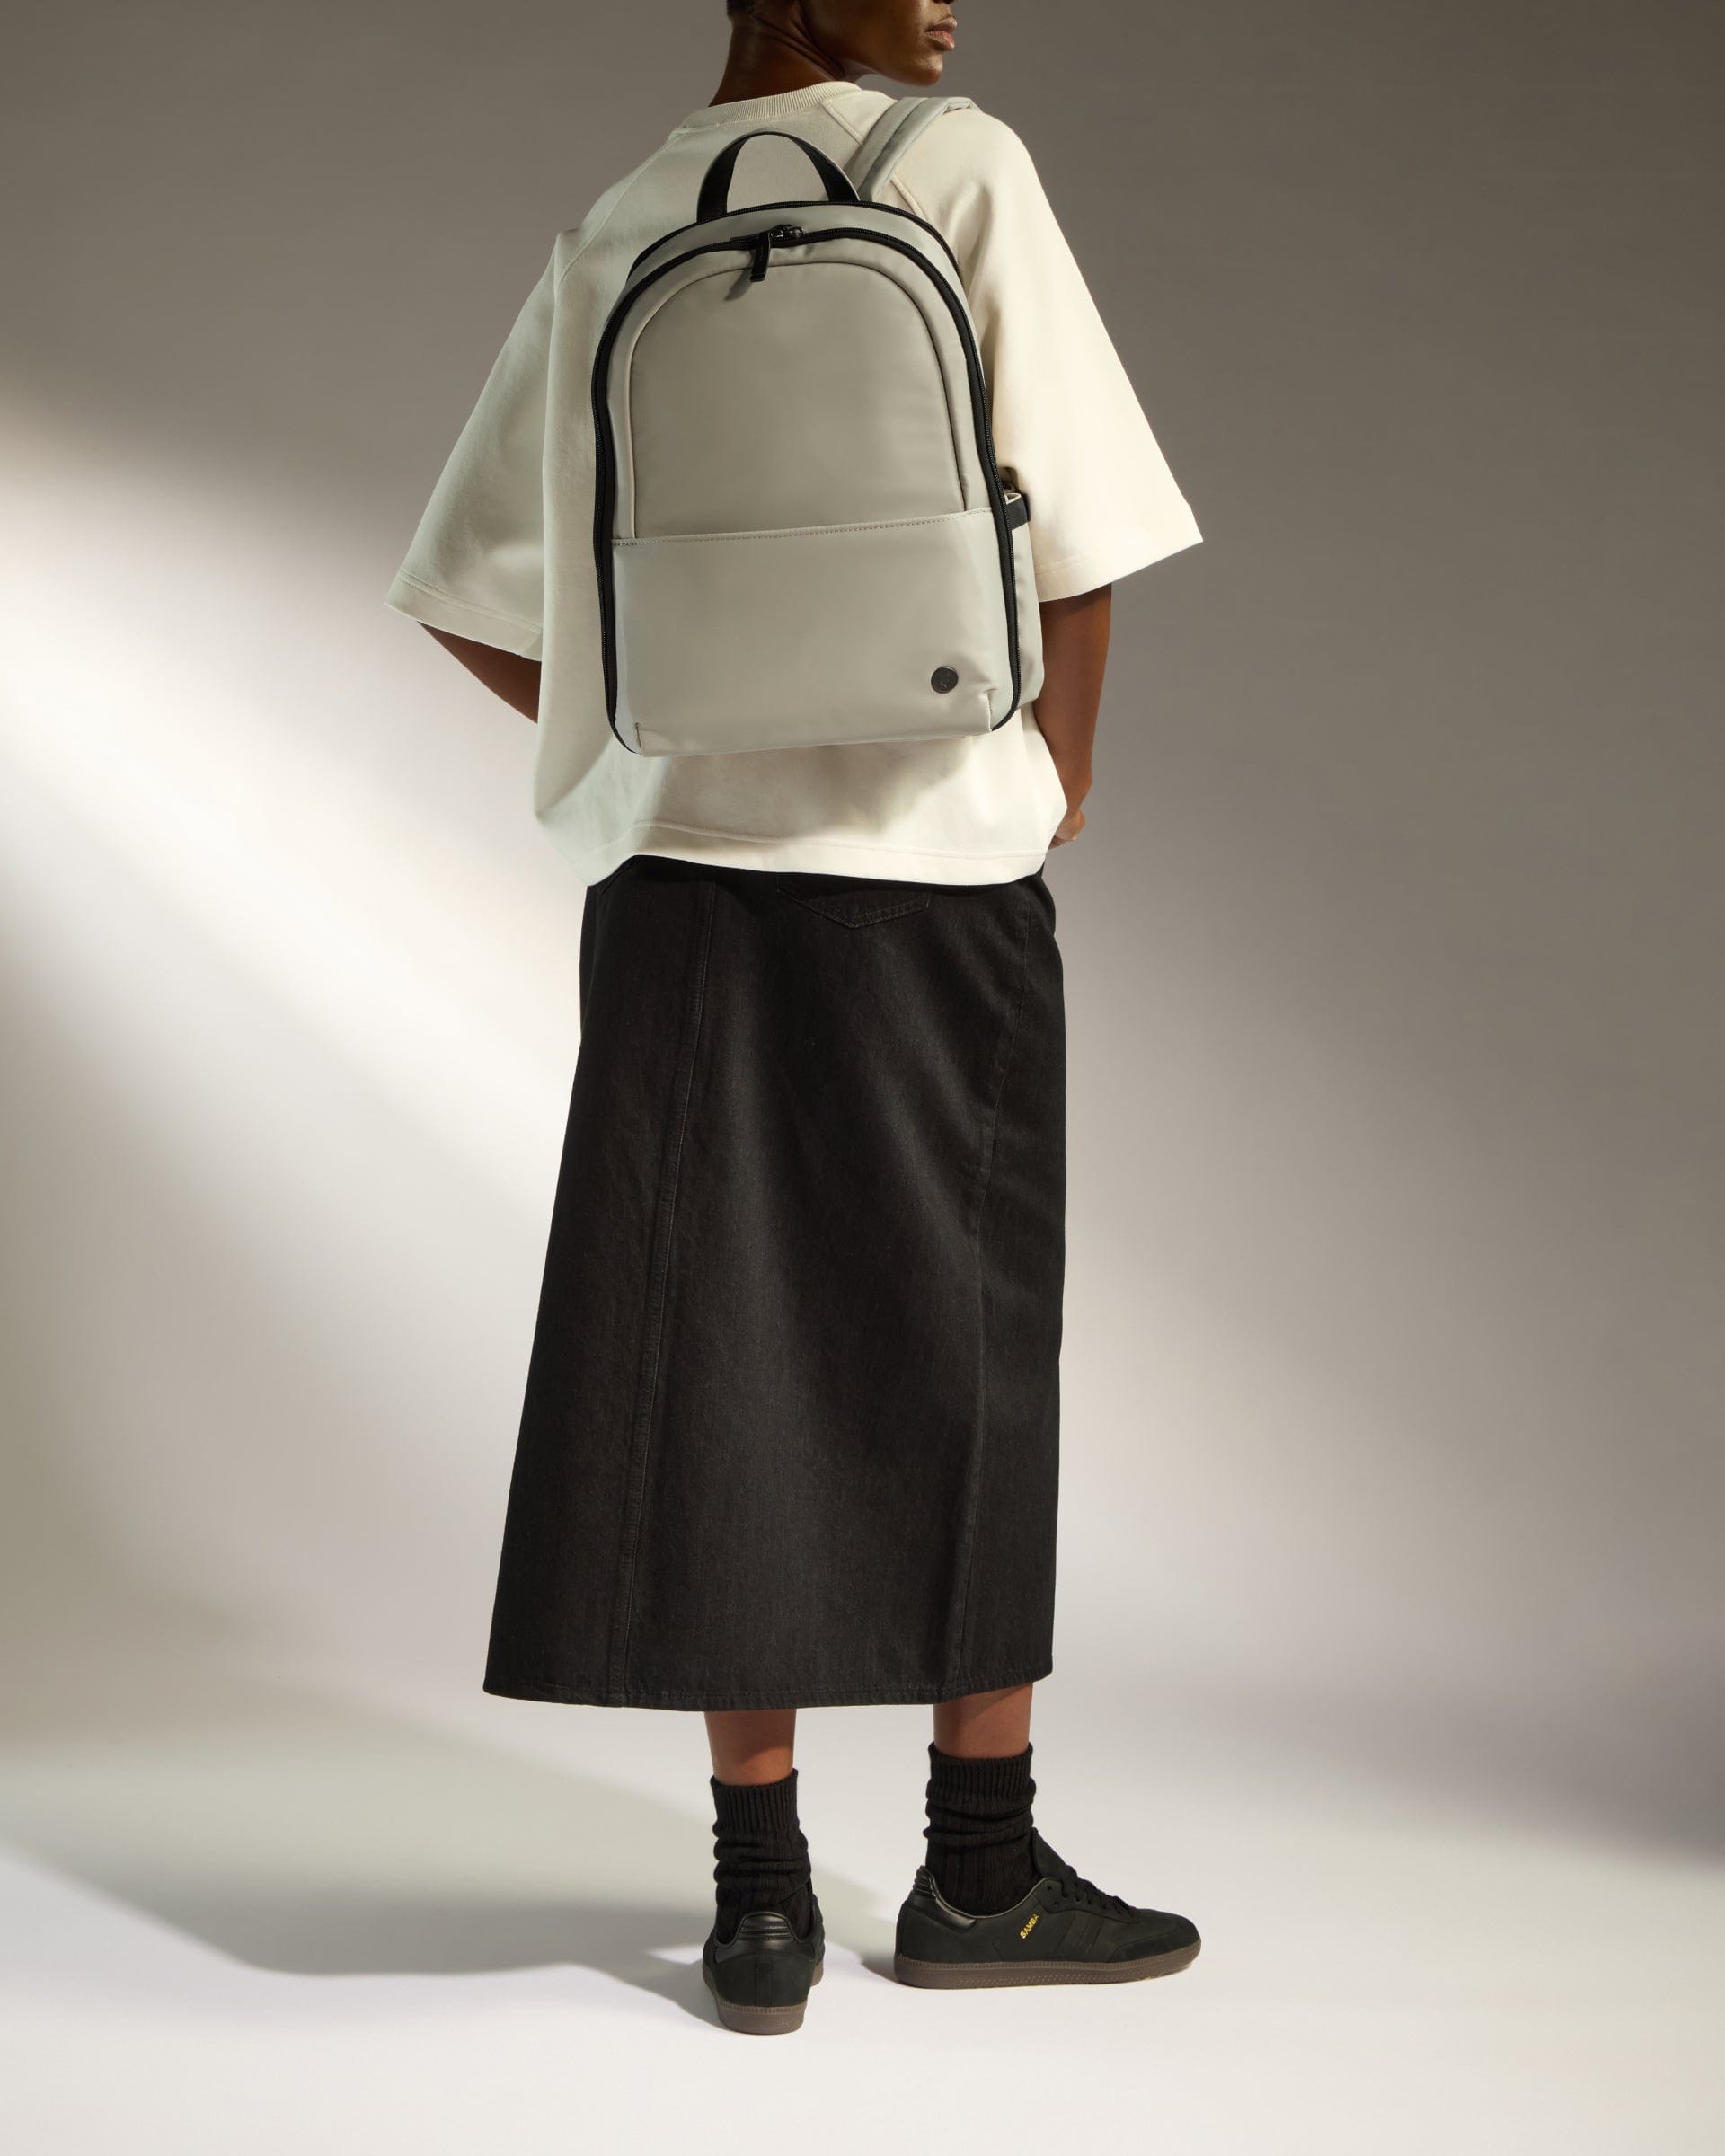 Antler Luggage -  Chelsea backpack in taupe - Backpacks Chelsea Backpack Taupe (Beige) | Travel & Lifestyle Bags | Antler UK